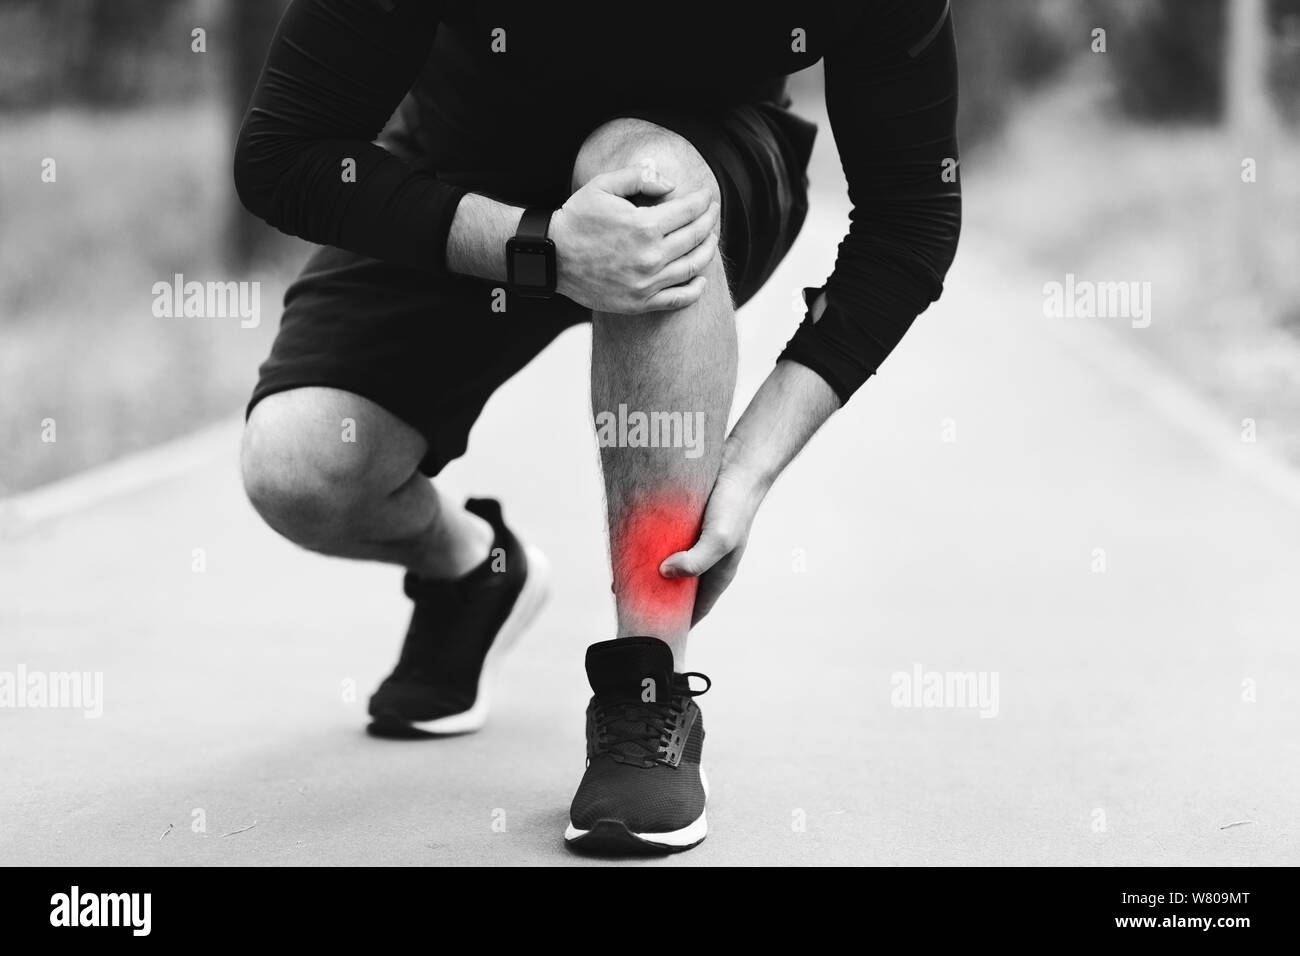 Man have sprain on leg, massaging painful muscle Stock Photo